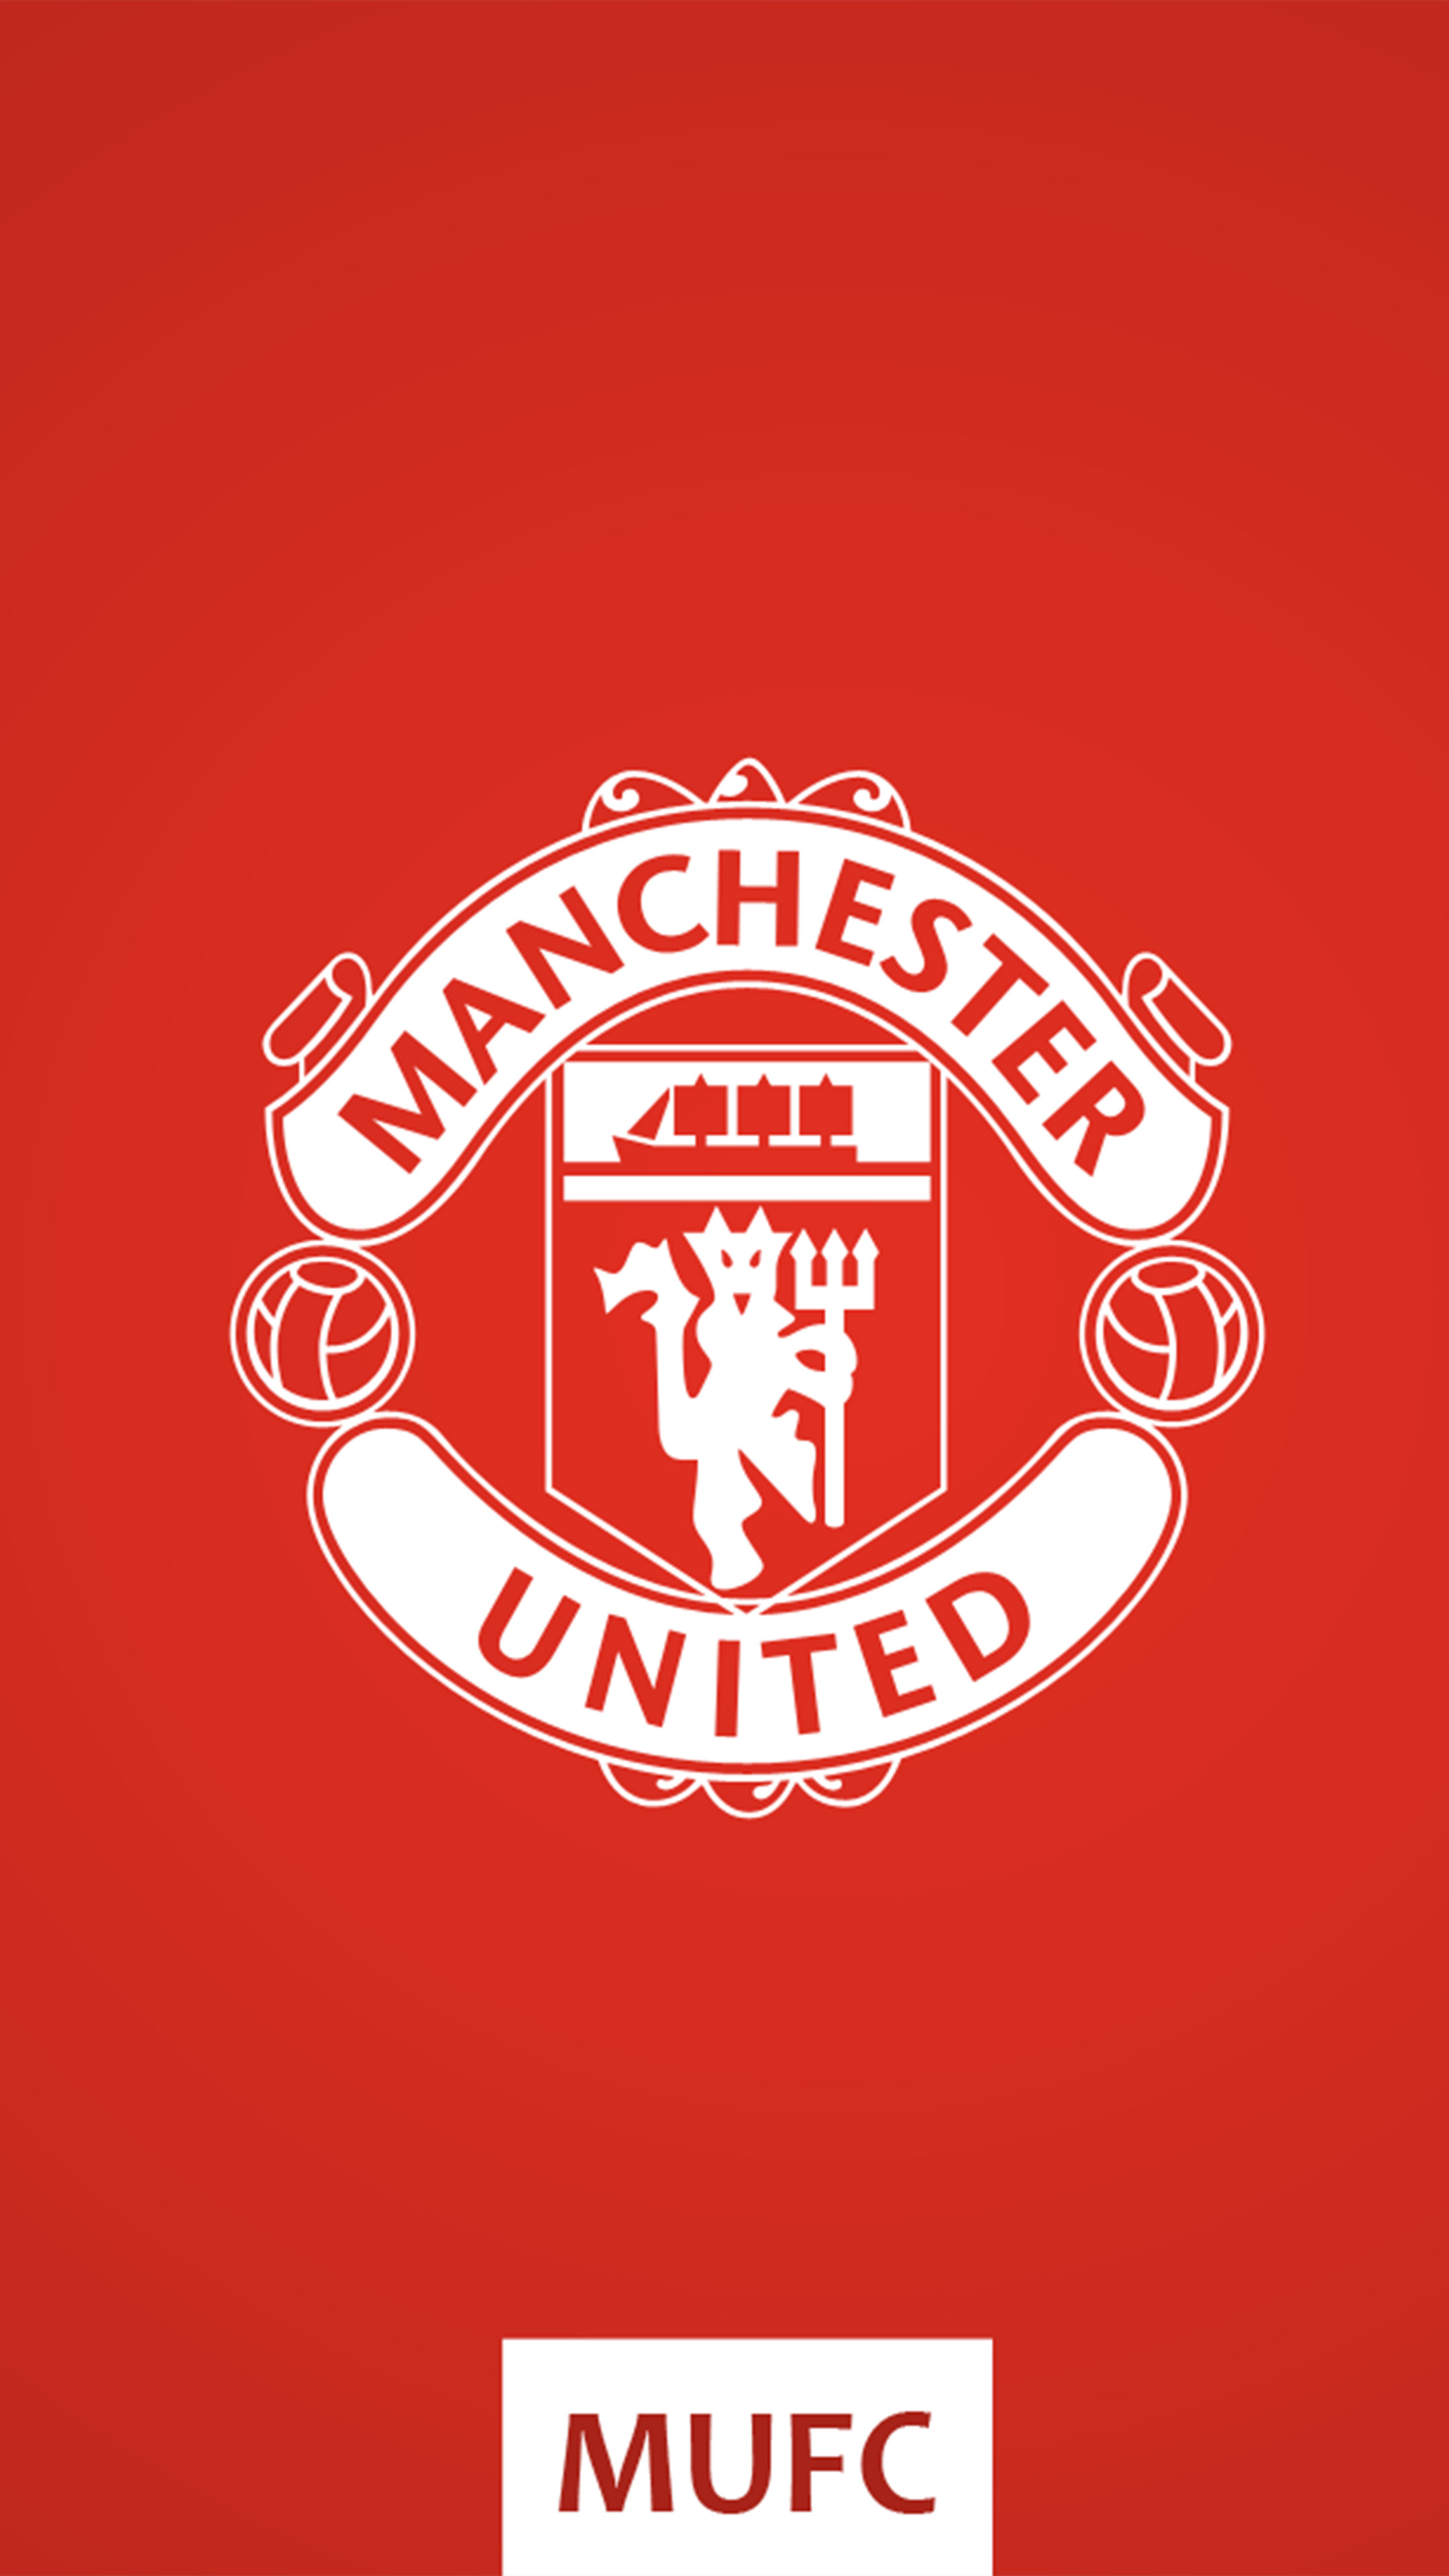 Manchester united fc logo red background k ultra hd mobile wallpaper